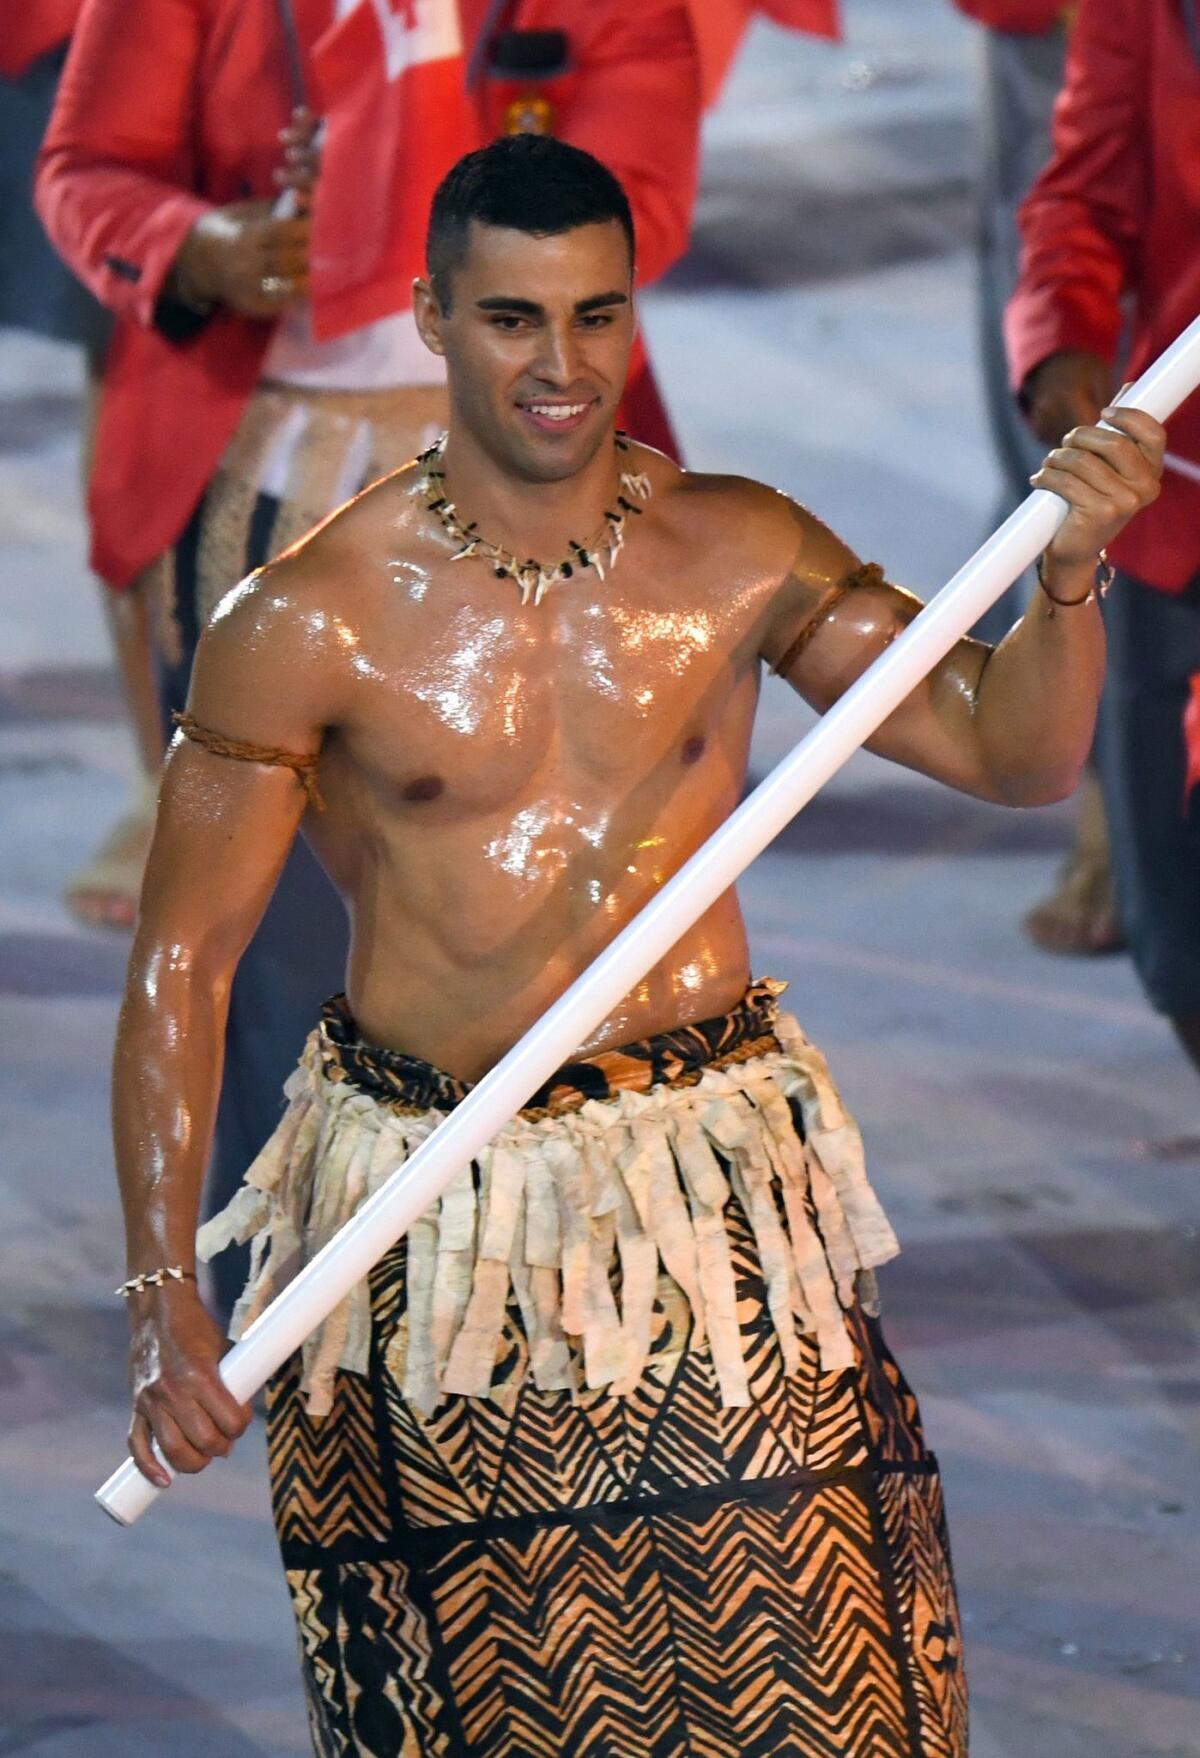 Taufatofua at the 2016 Rio Games